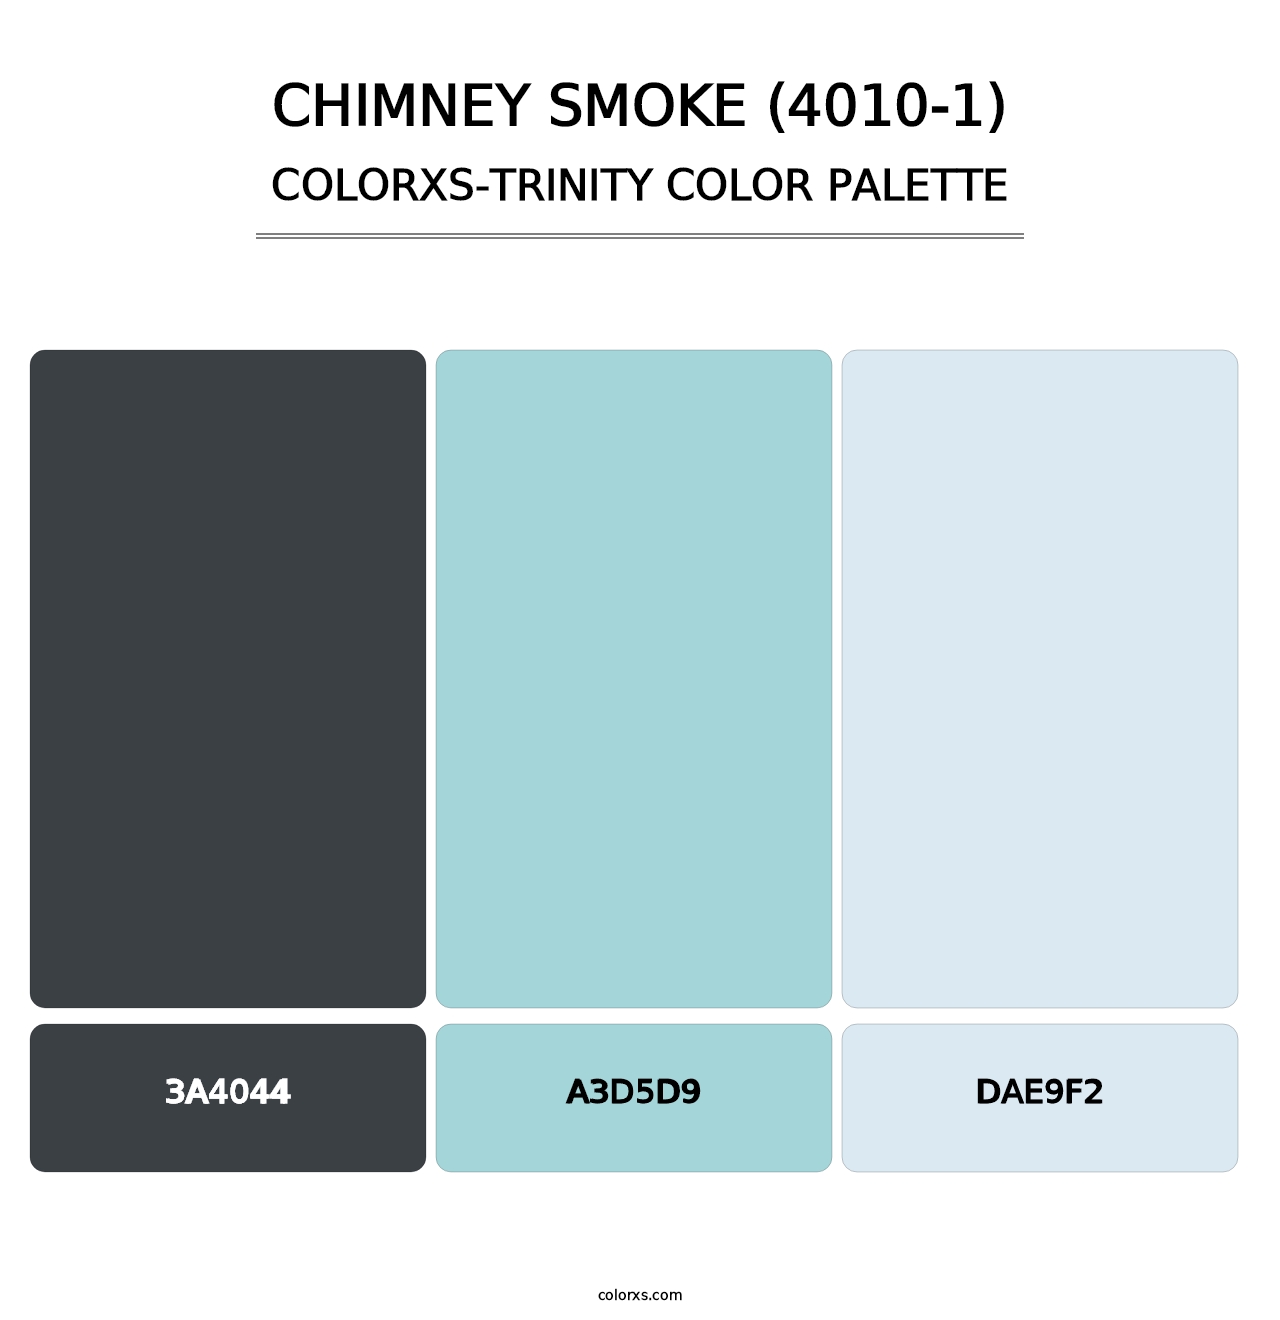 Chimney Smoke (4010-1) - Colorxs Trinity Palette